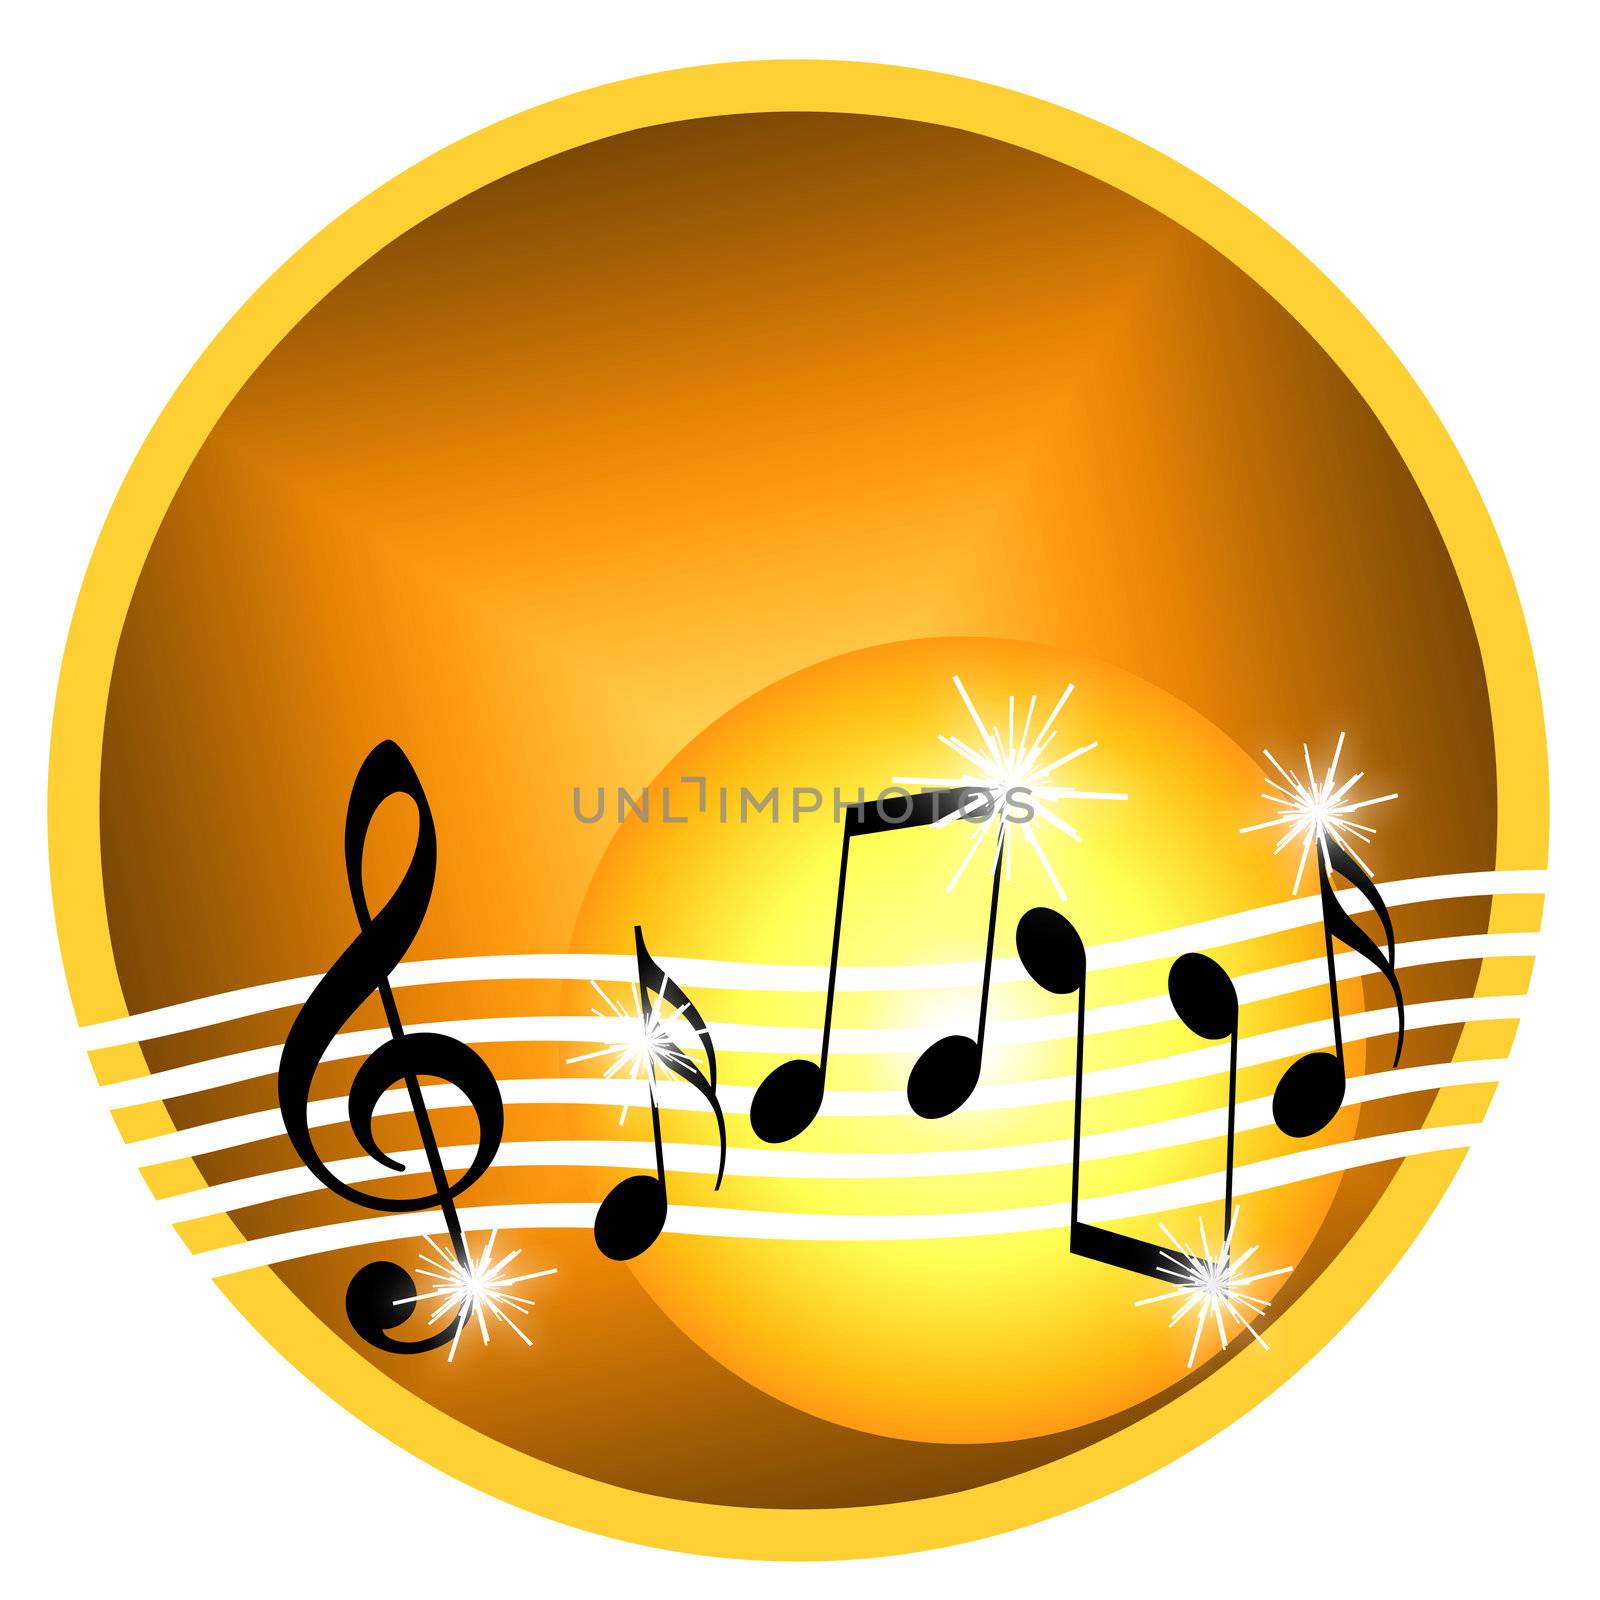 Golden music illustration with random musical symbols